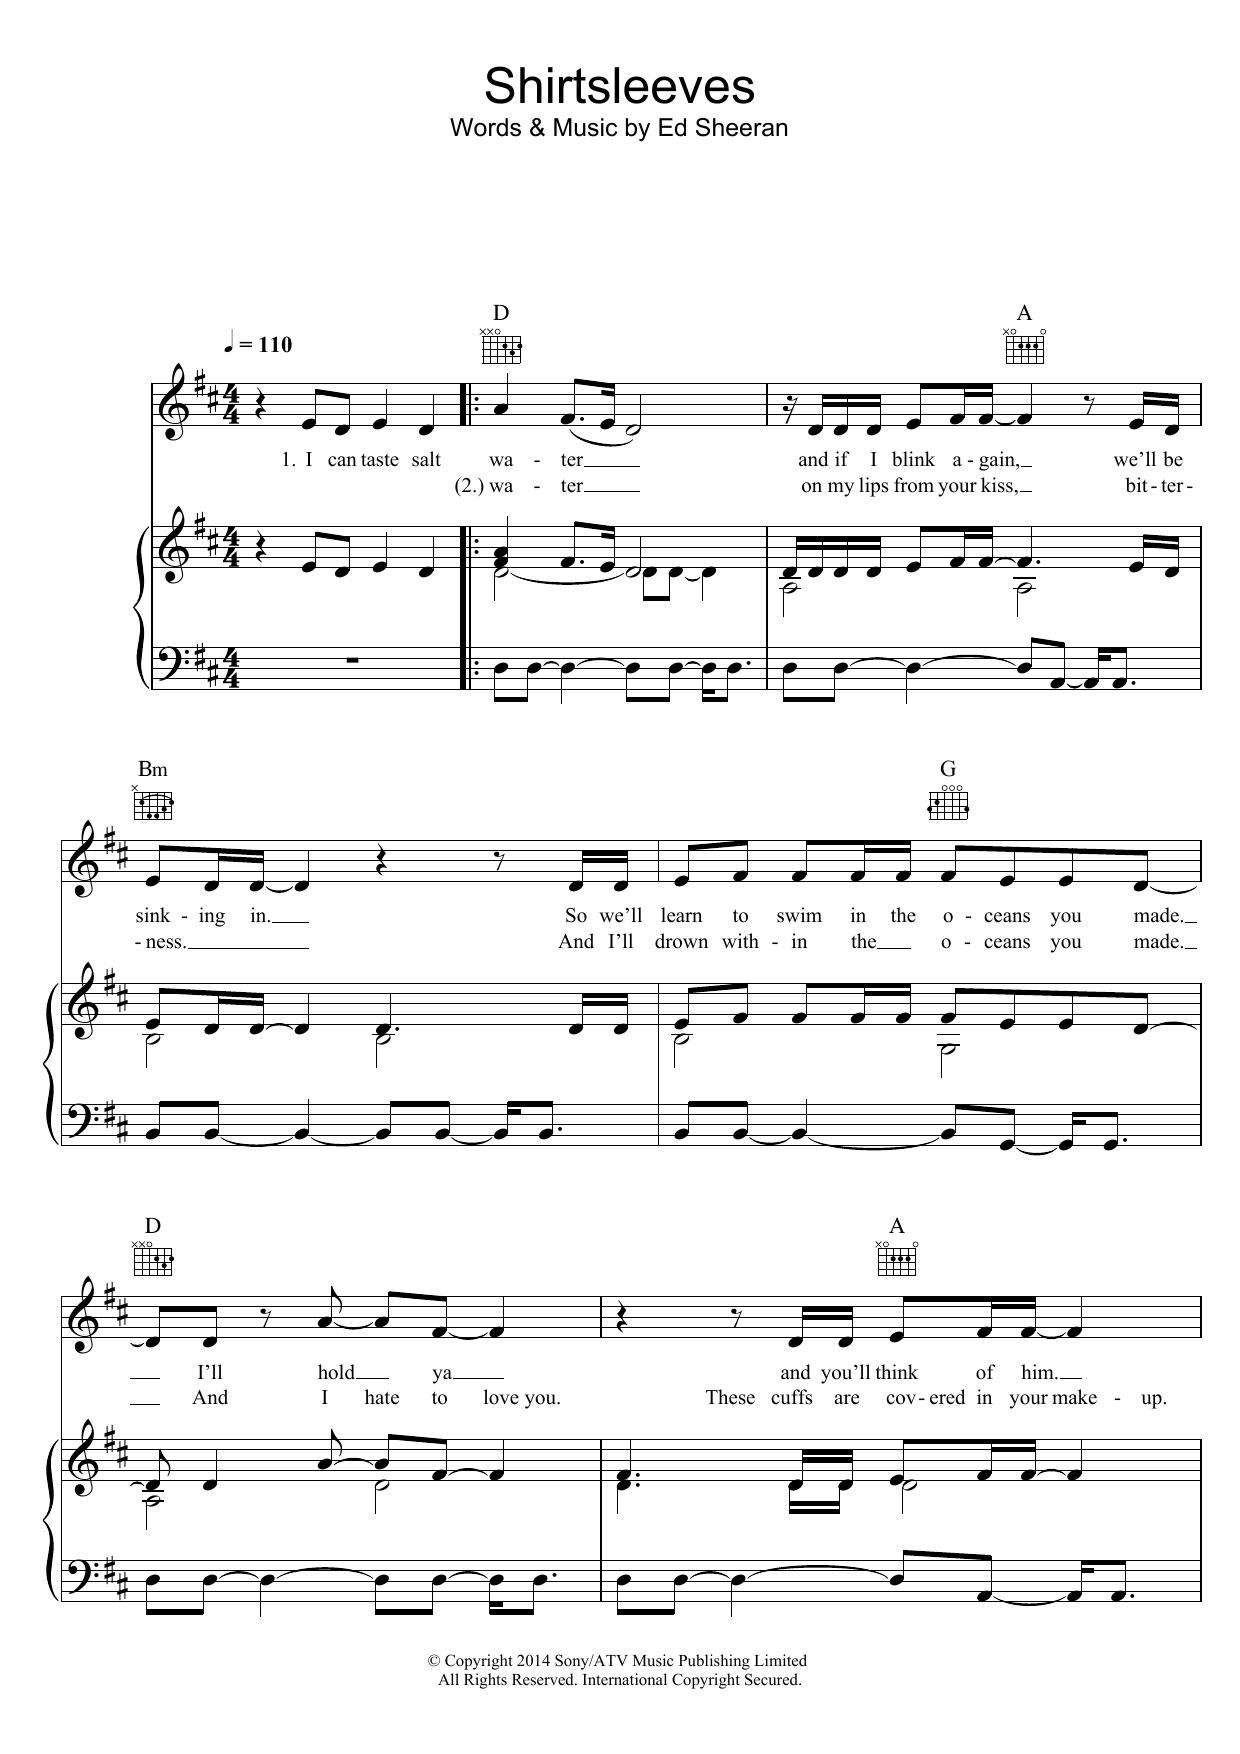 Ed Sheeran Shirtsleeves sheet music notes and chords arranged for Piano, Vocal & Guitar Chords